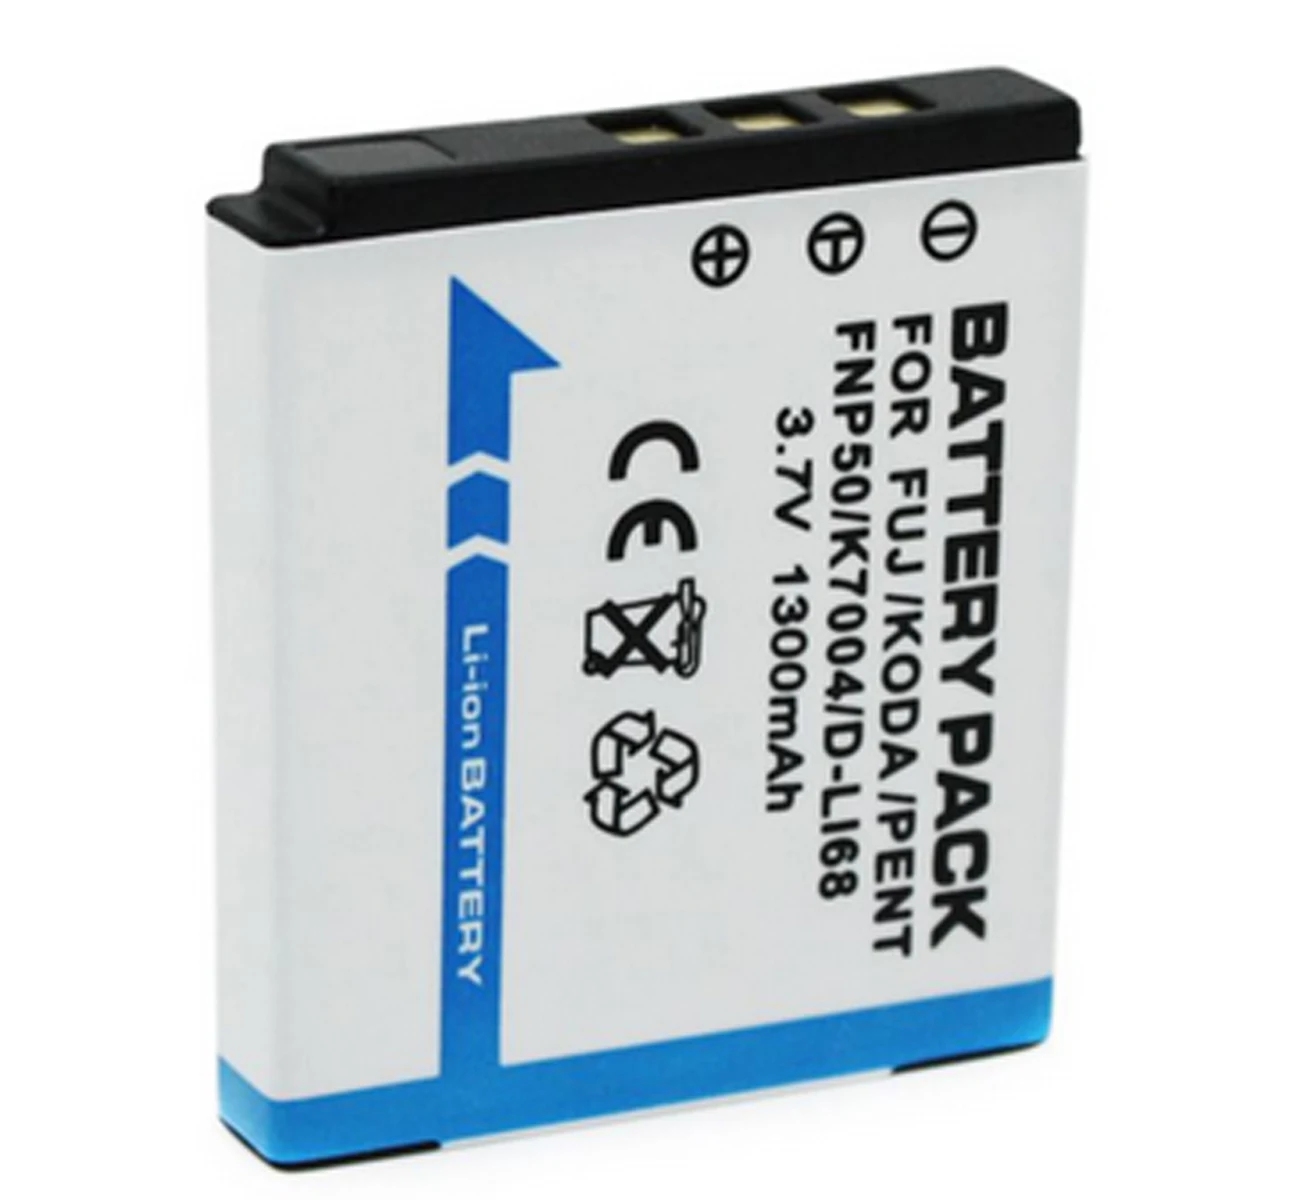 Premium Batteria di ricambio batteria per Kodak PlaySport zx3 